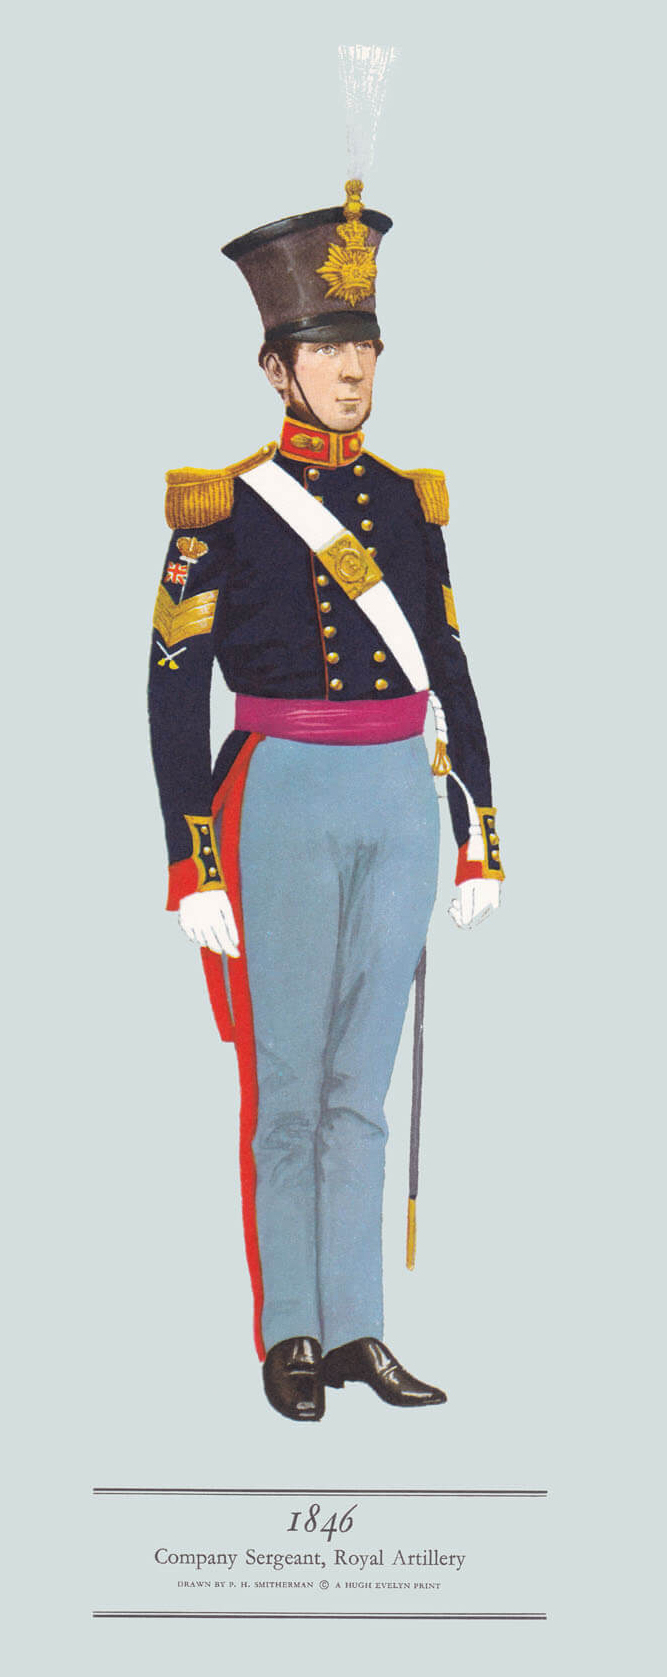 Sergeant RHA 1846 